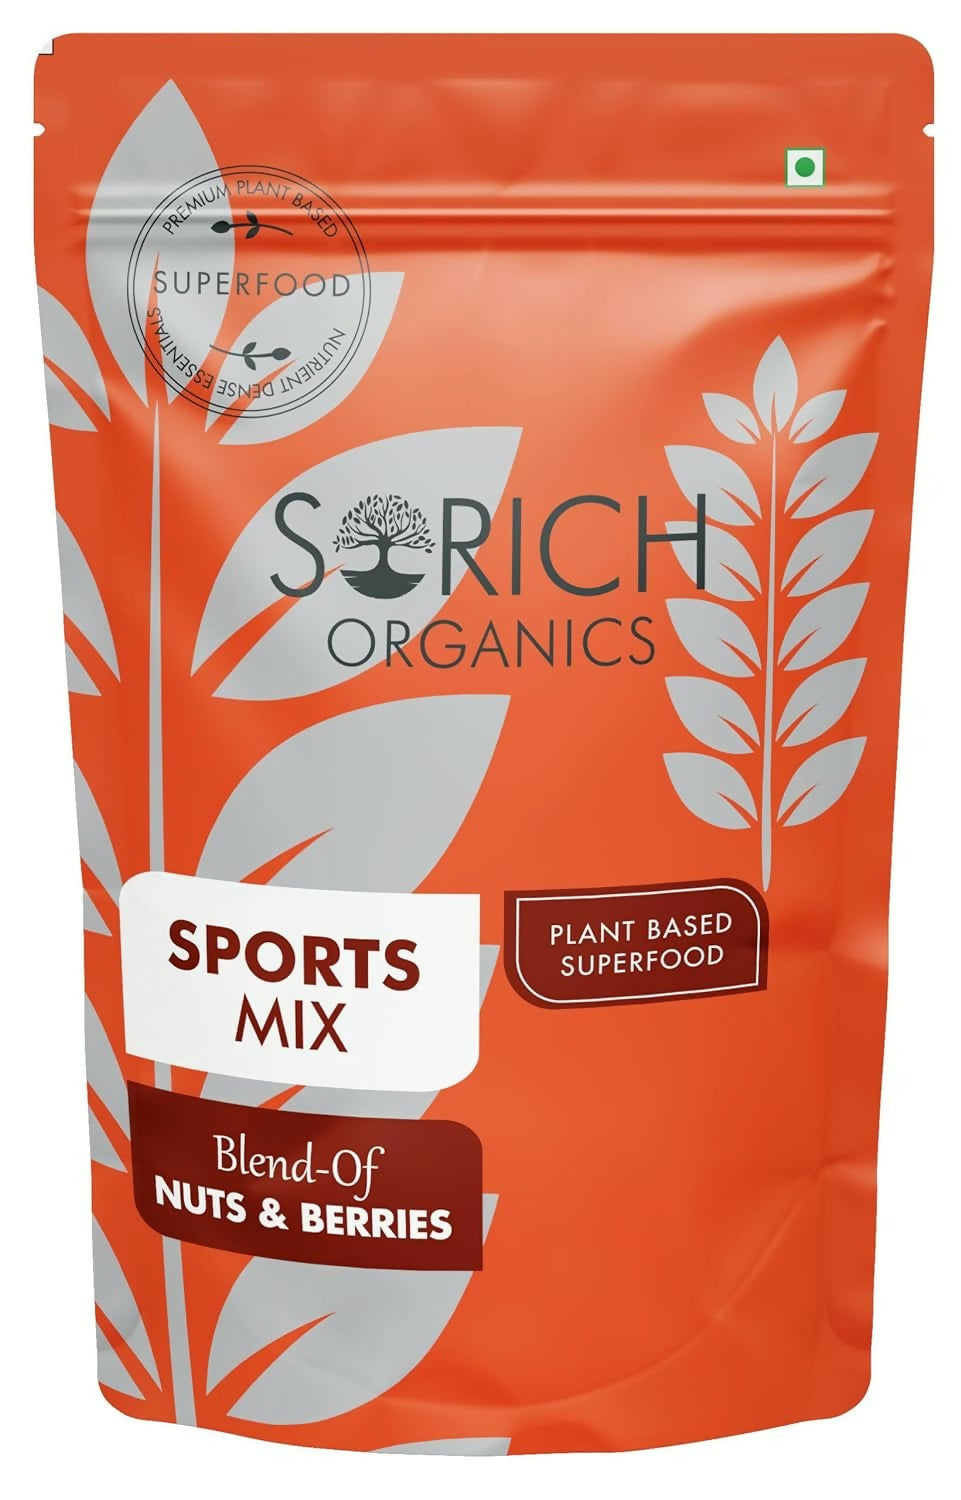 Sorich Organics Sports Mix Dry Fruits - BUDNE